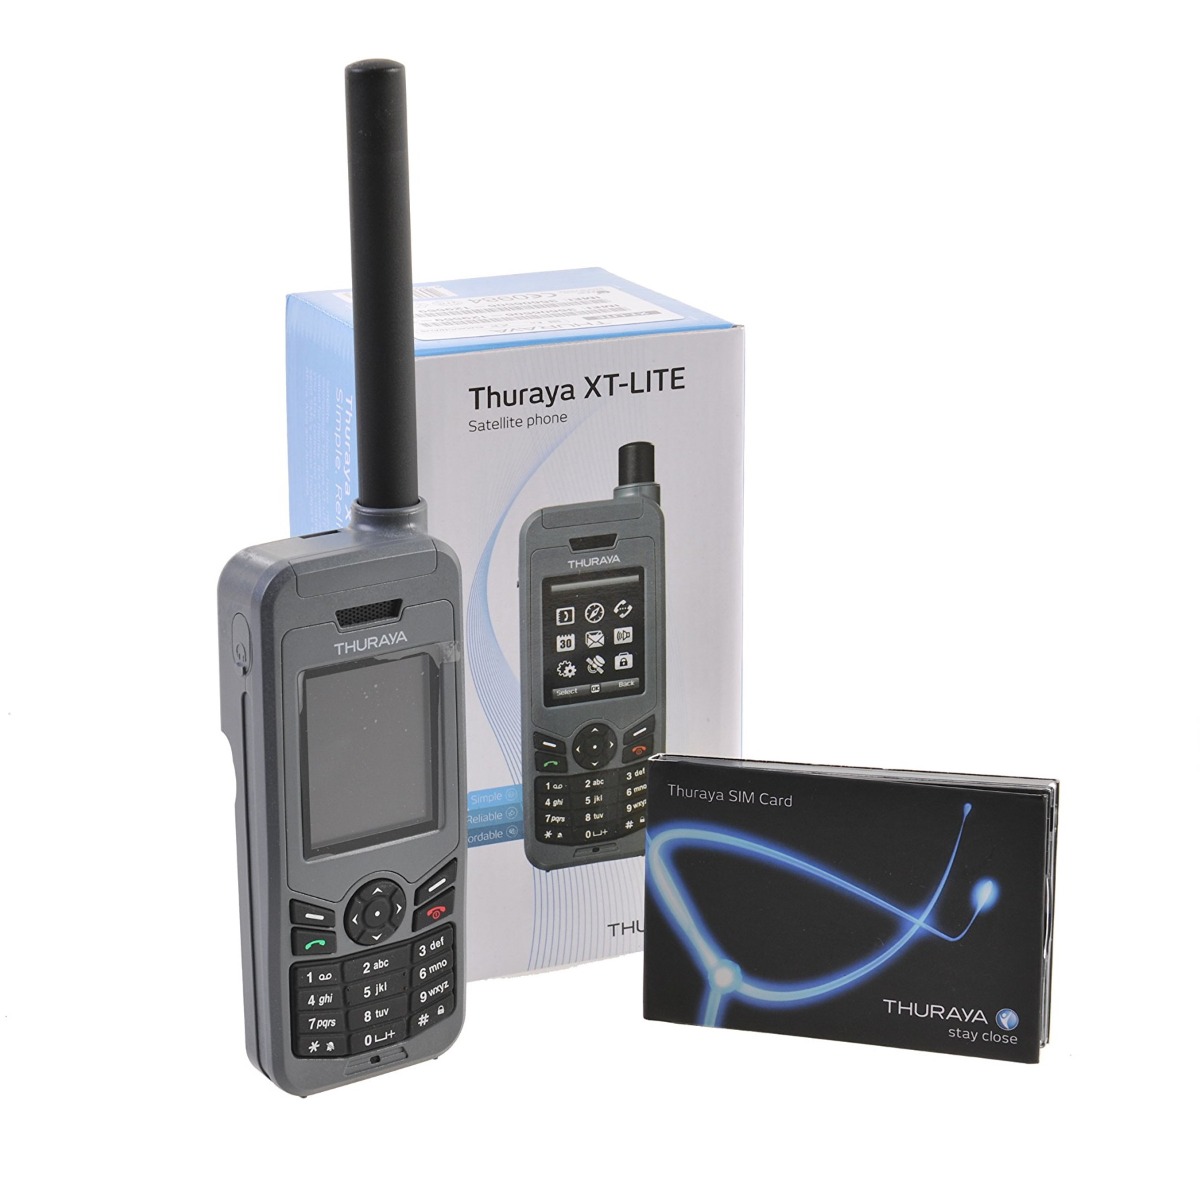 Thuraya XT-LITE Satellite Phone + Free SIM Card